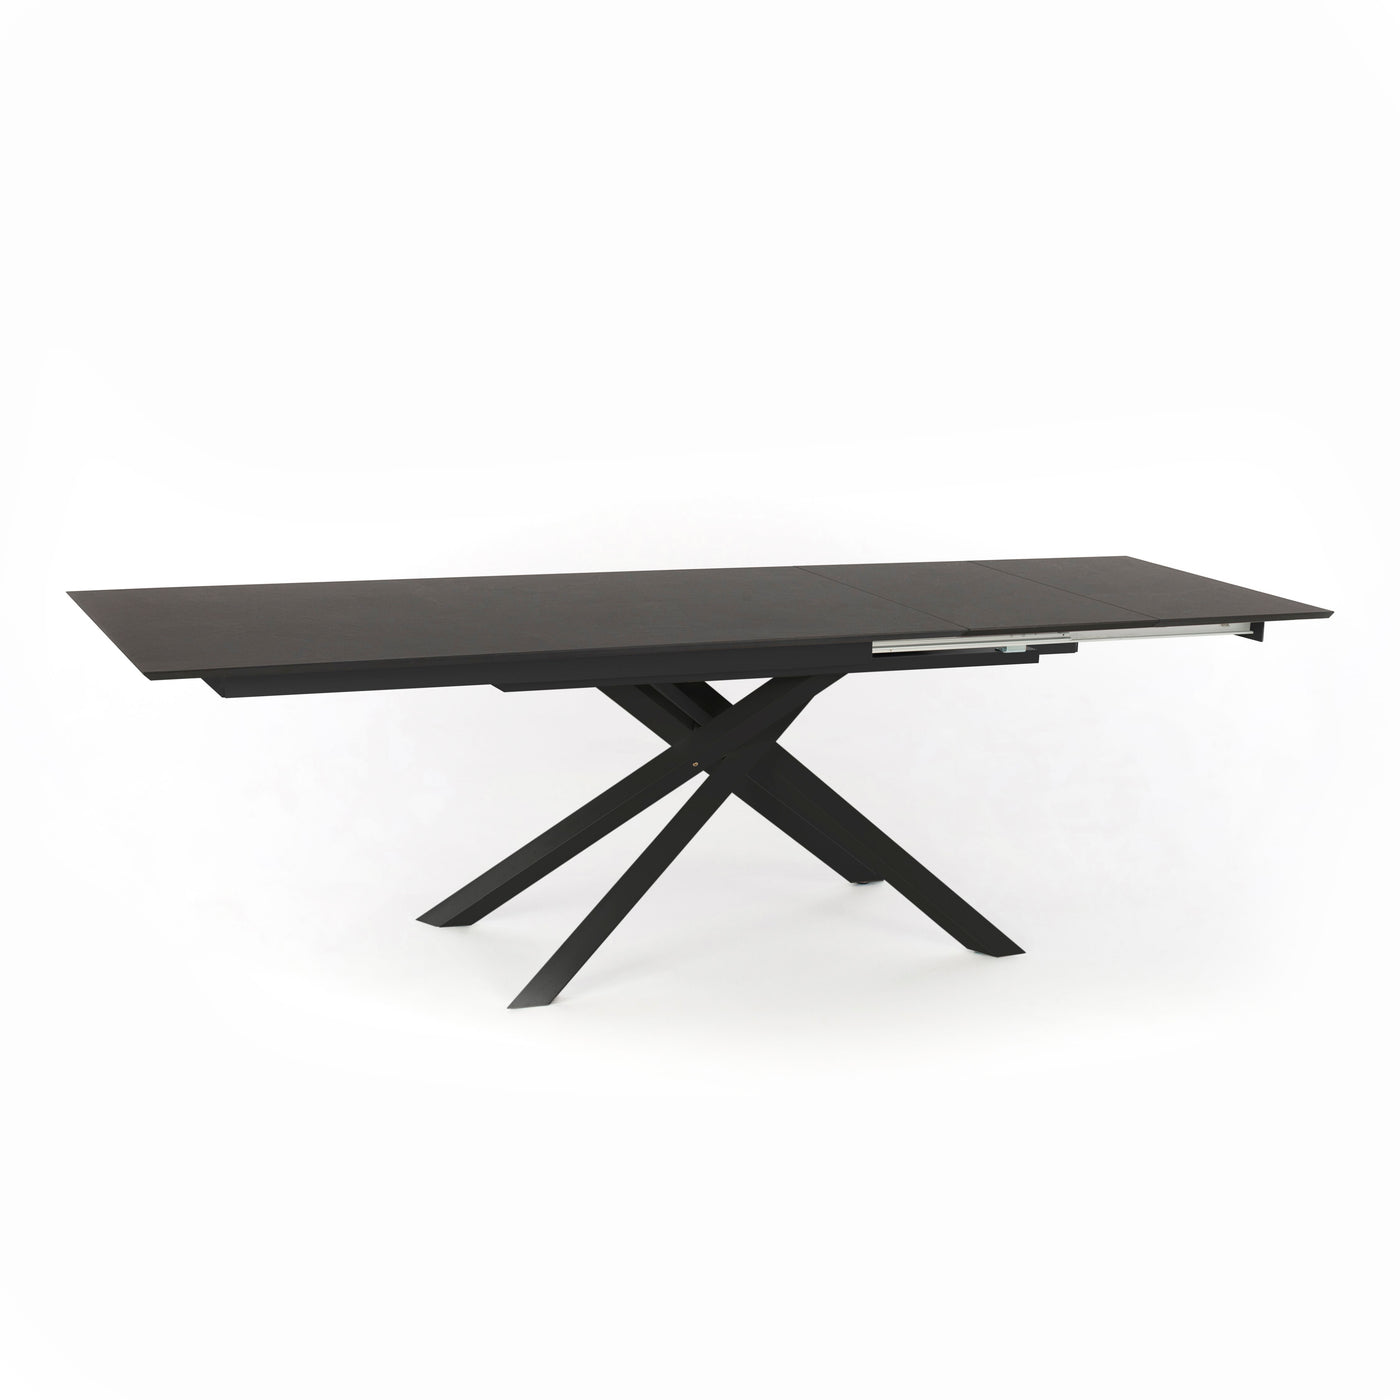 MENS dark gray extendable table